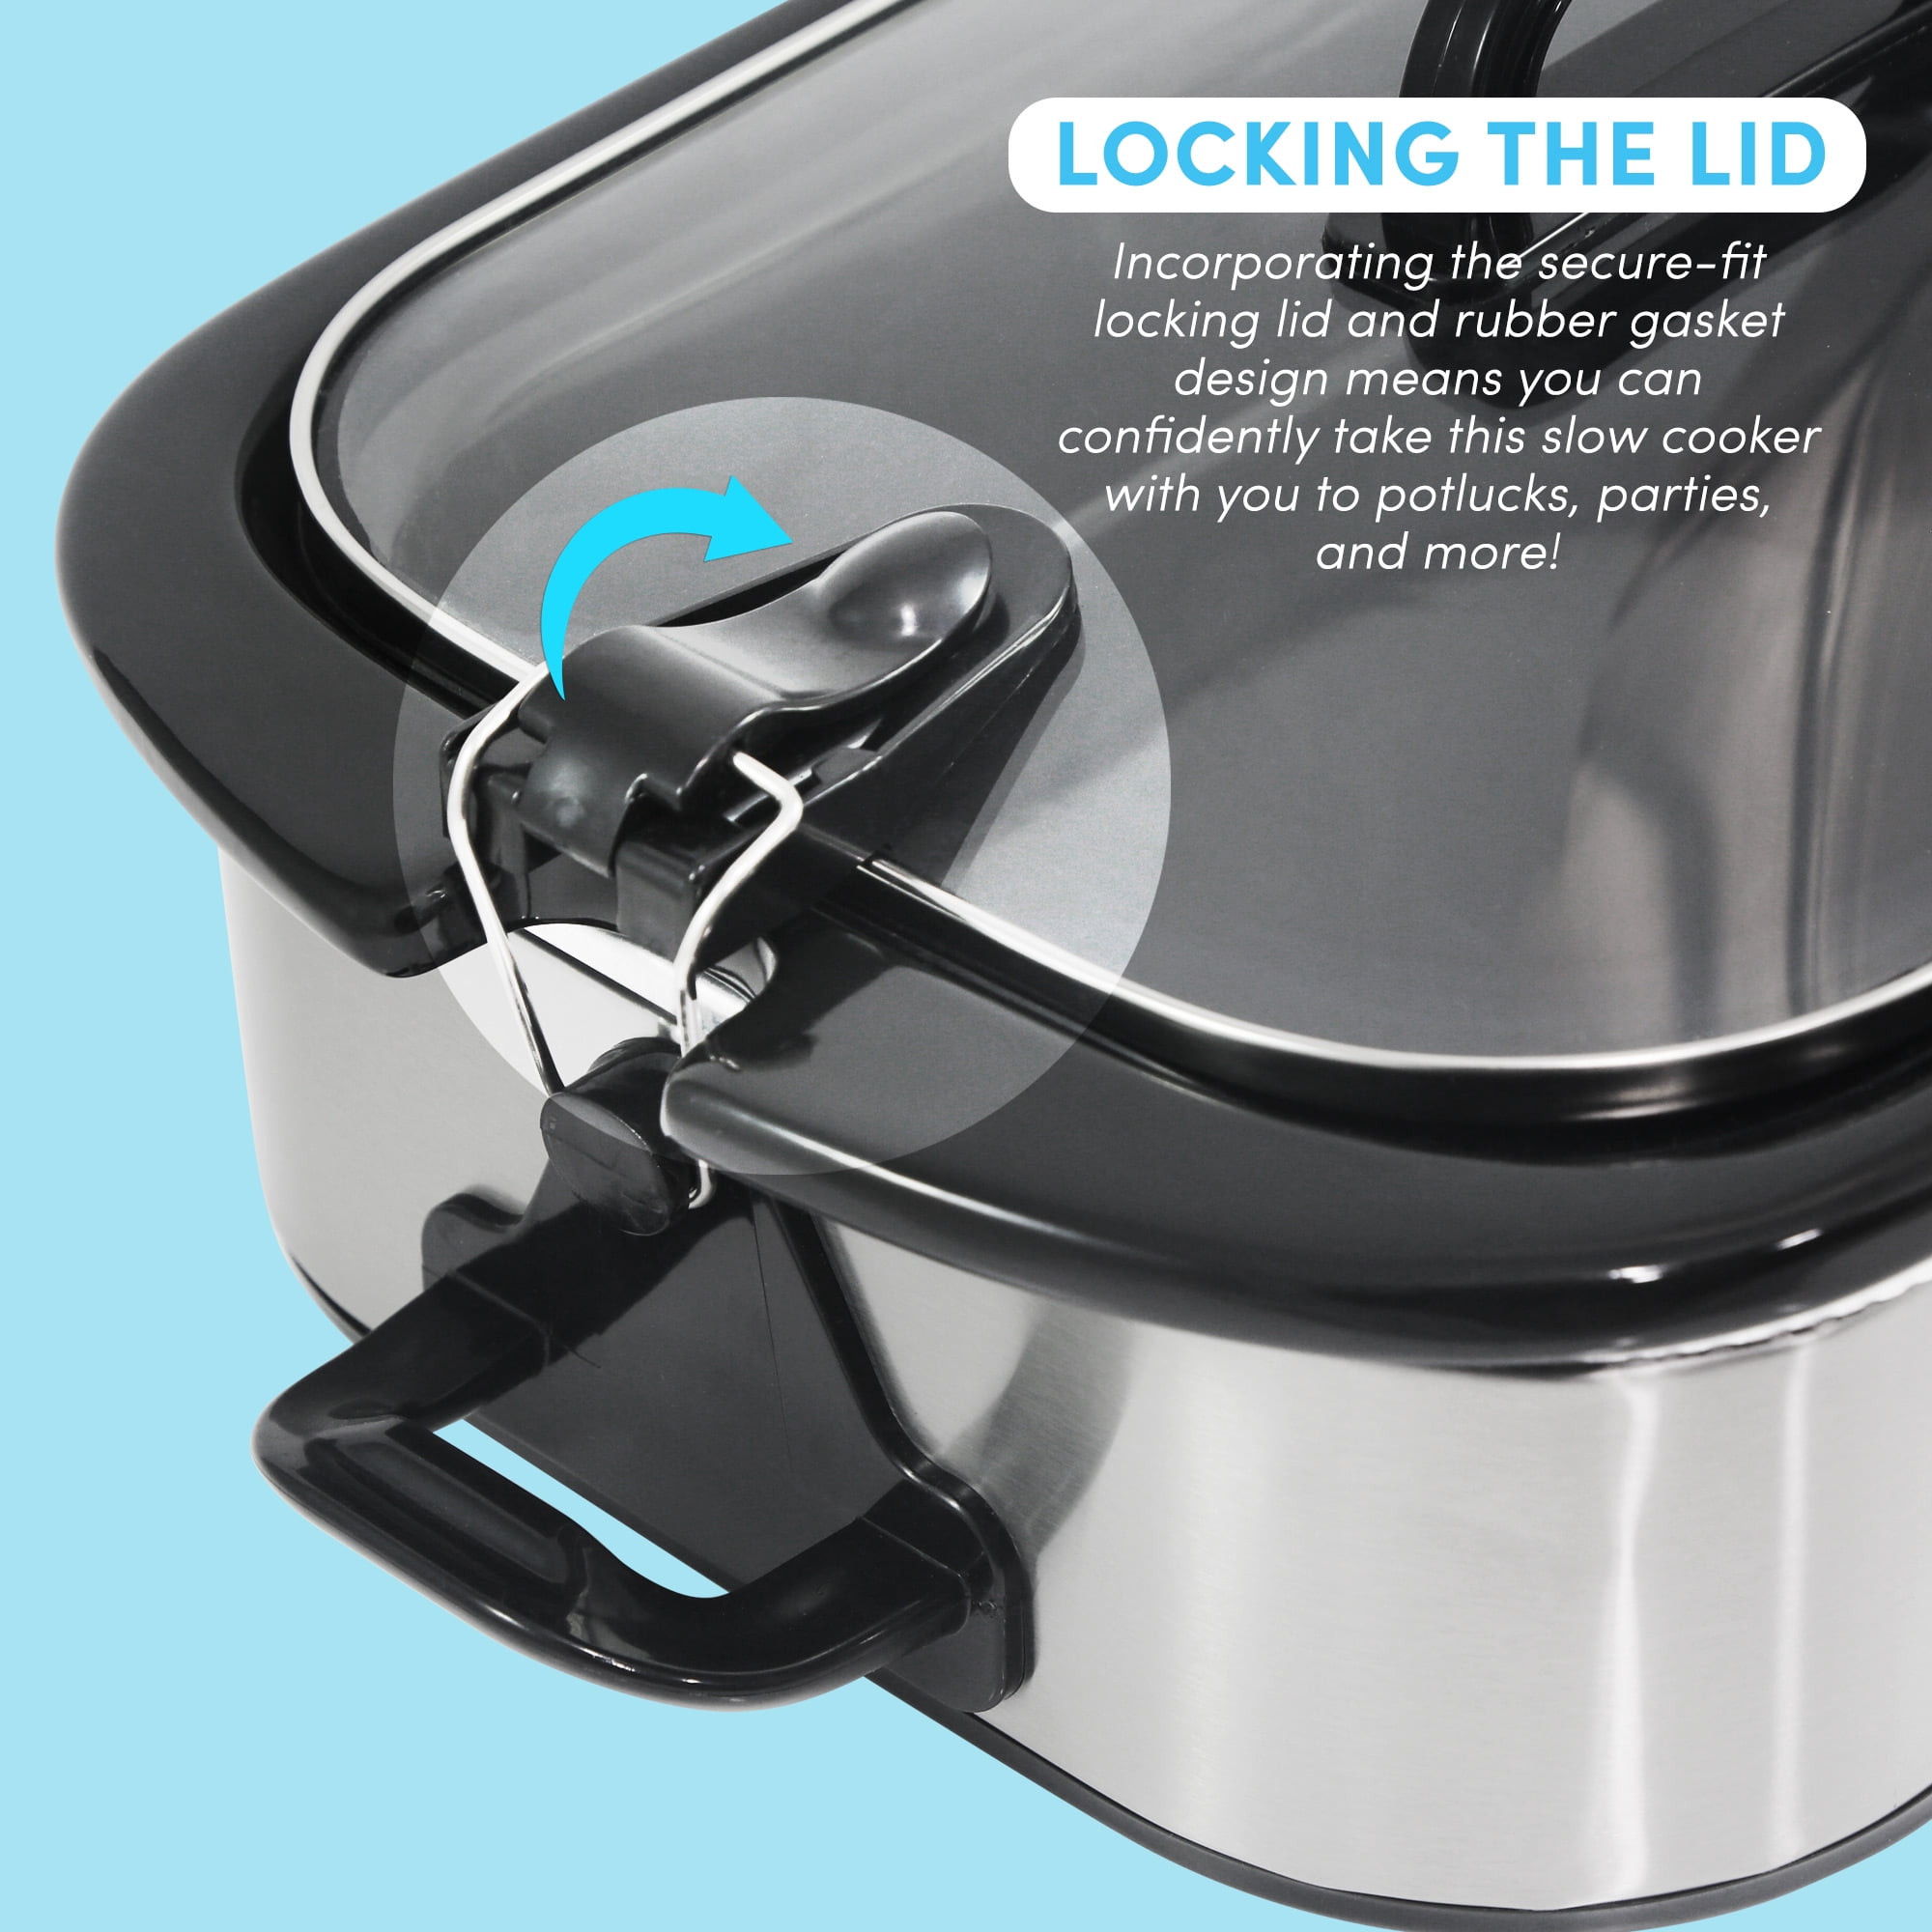 Crock-Pot Casserole Crock 3.5 qt. Charcoal Slow Cooker with Locking Lid  985119570M - The Home Depot